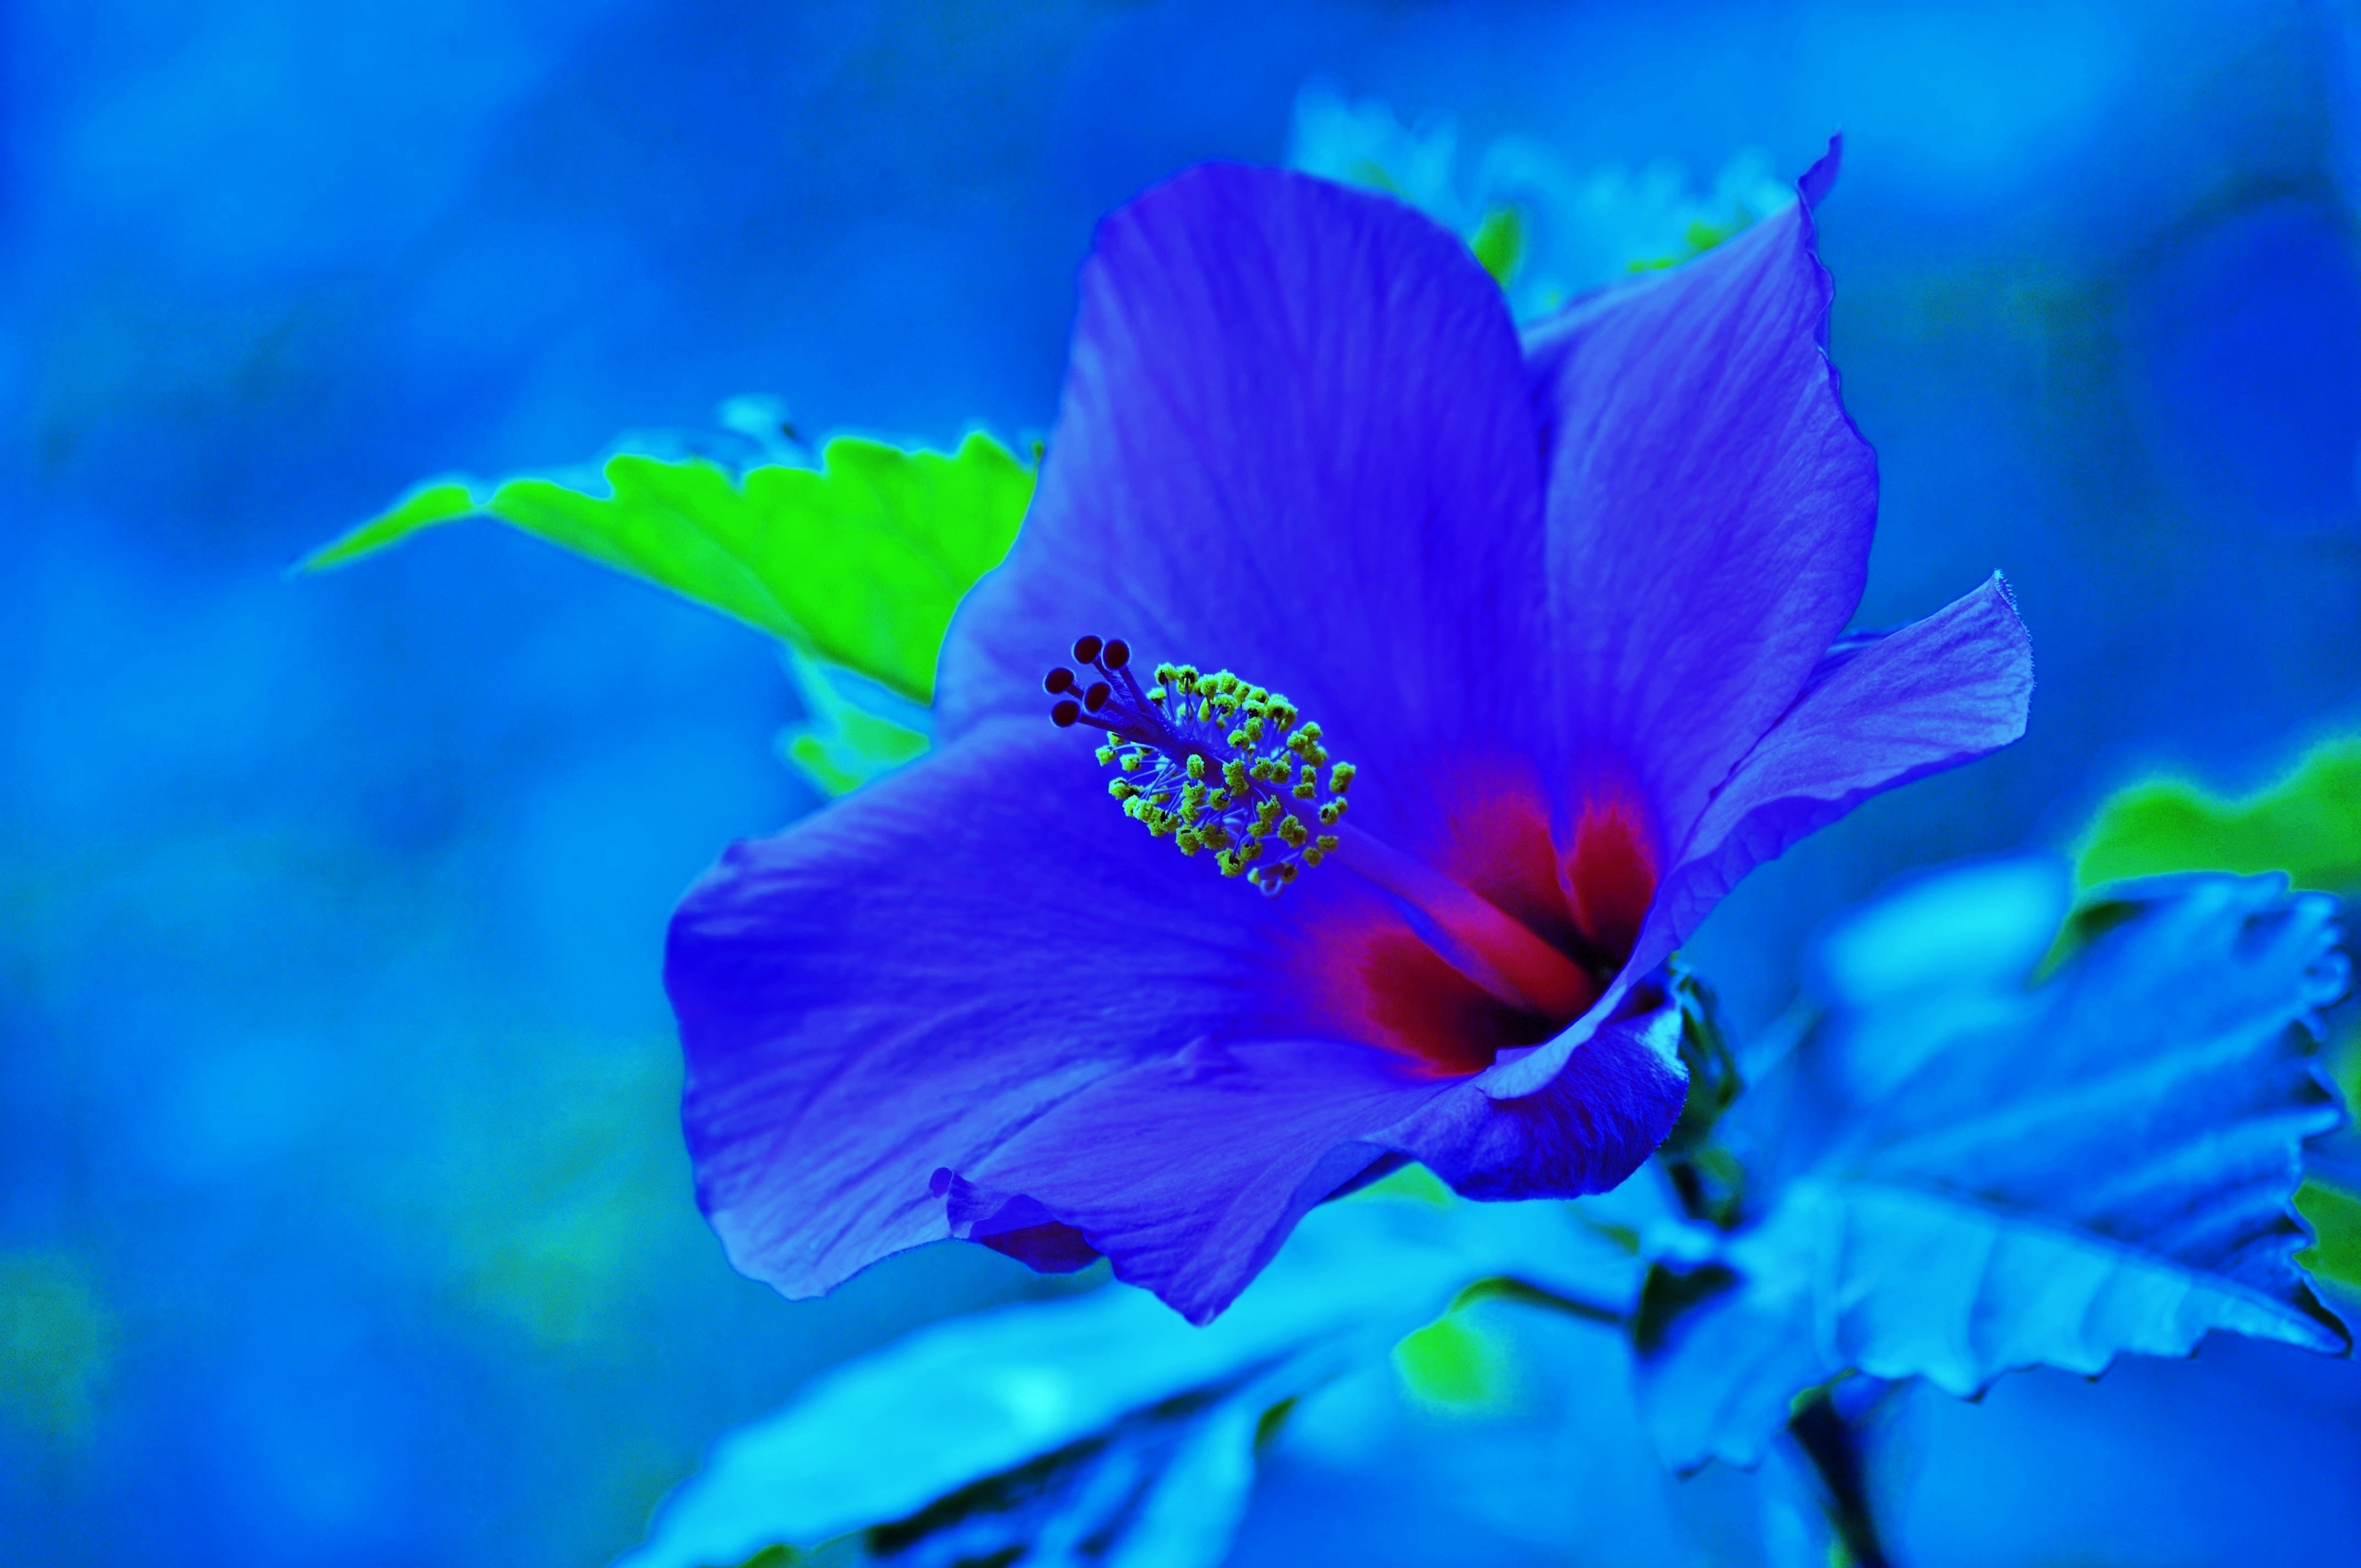 379699 descargar imagen tierra/naturaleza, hibisco, flor azul, de cerca, flor, flores: fondos de pantalla y protectores de pantalla gratis